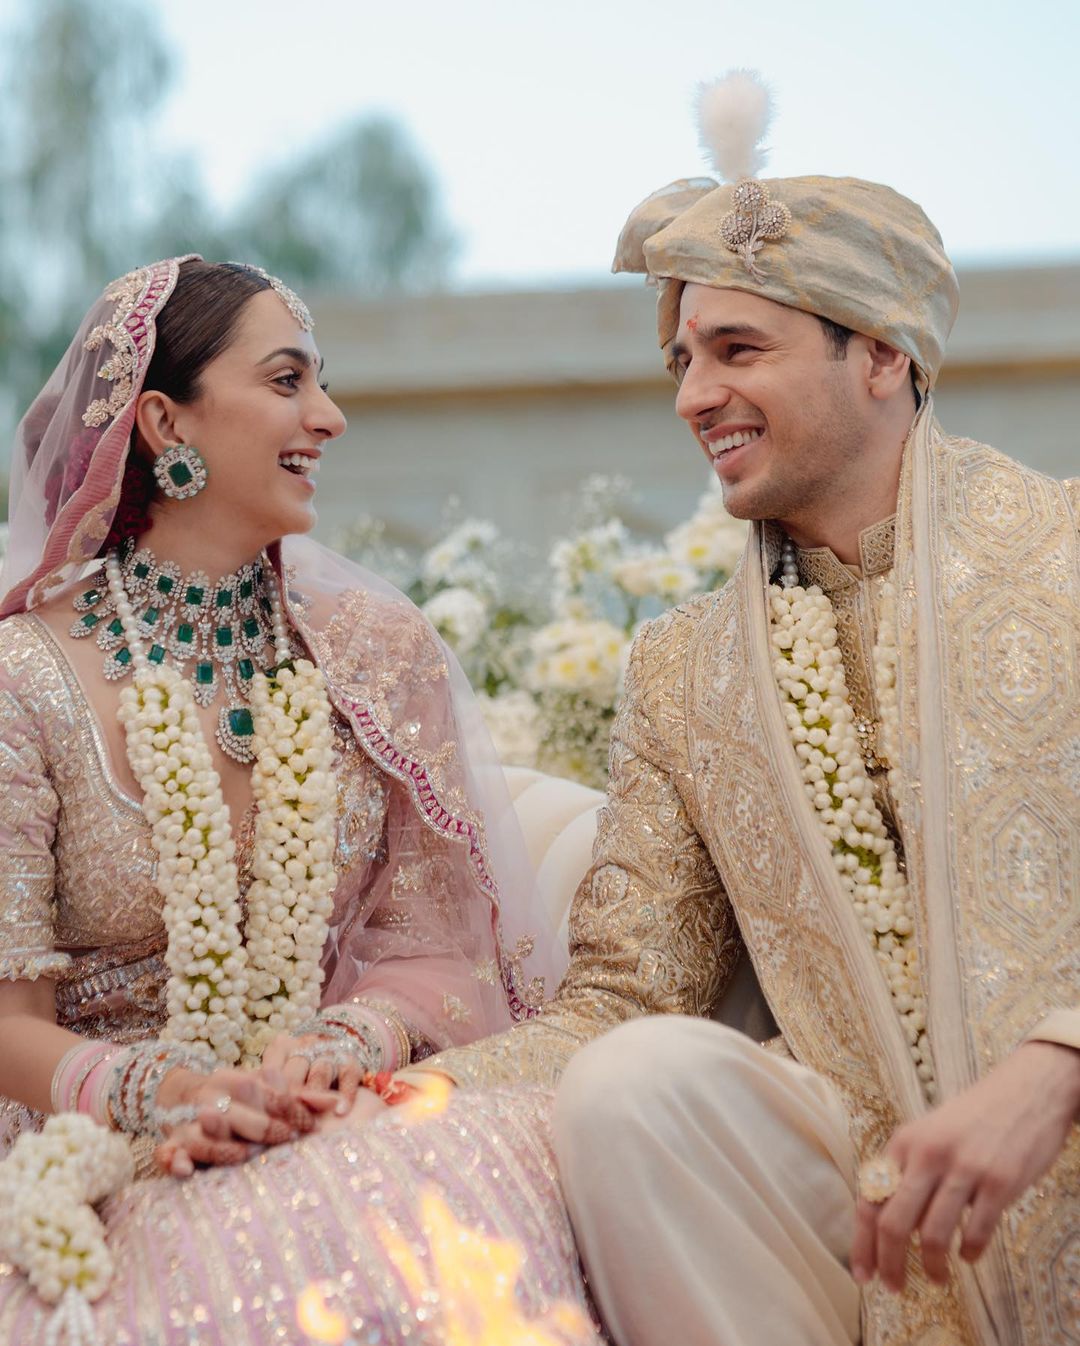 Kiara Advani and Sidharth Malhotra’s Dreamy Jaisalmer Wedding